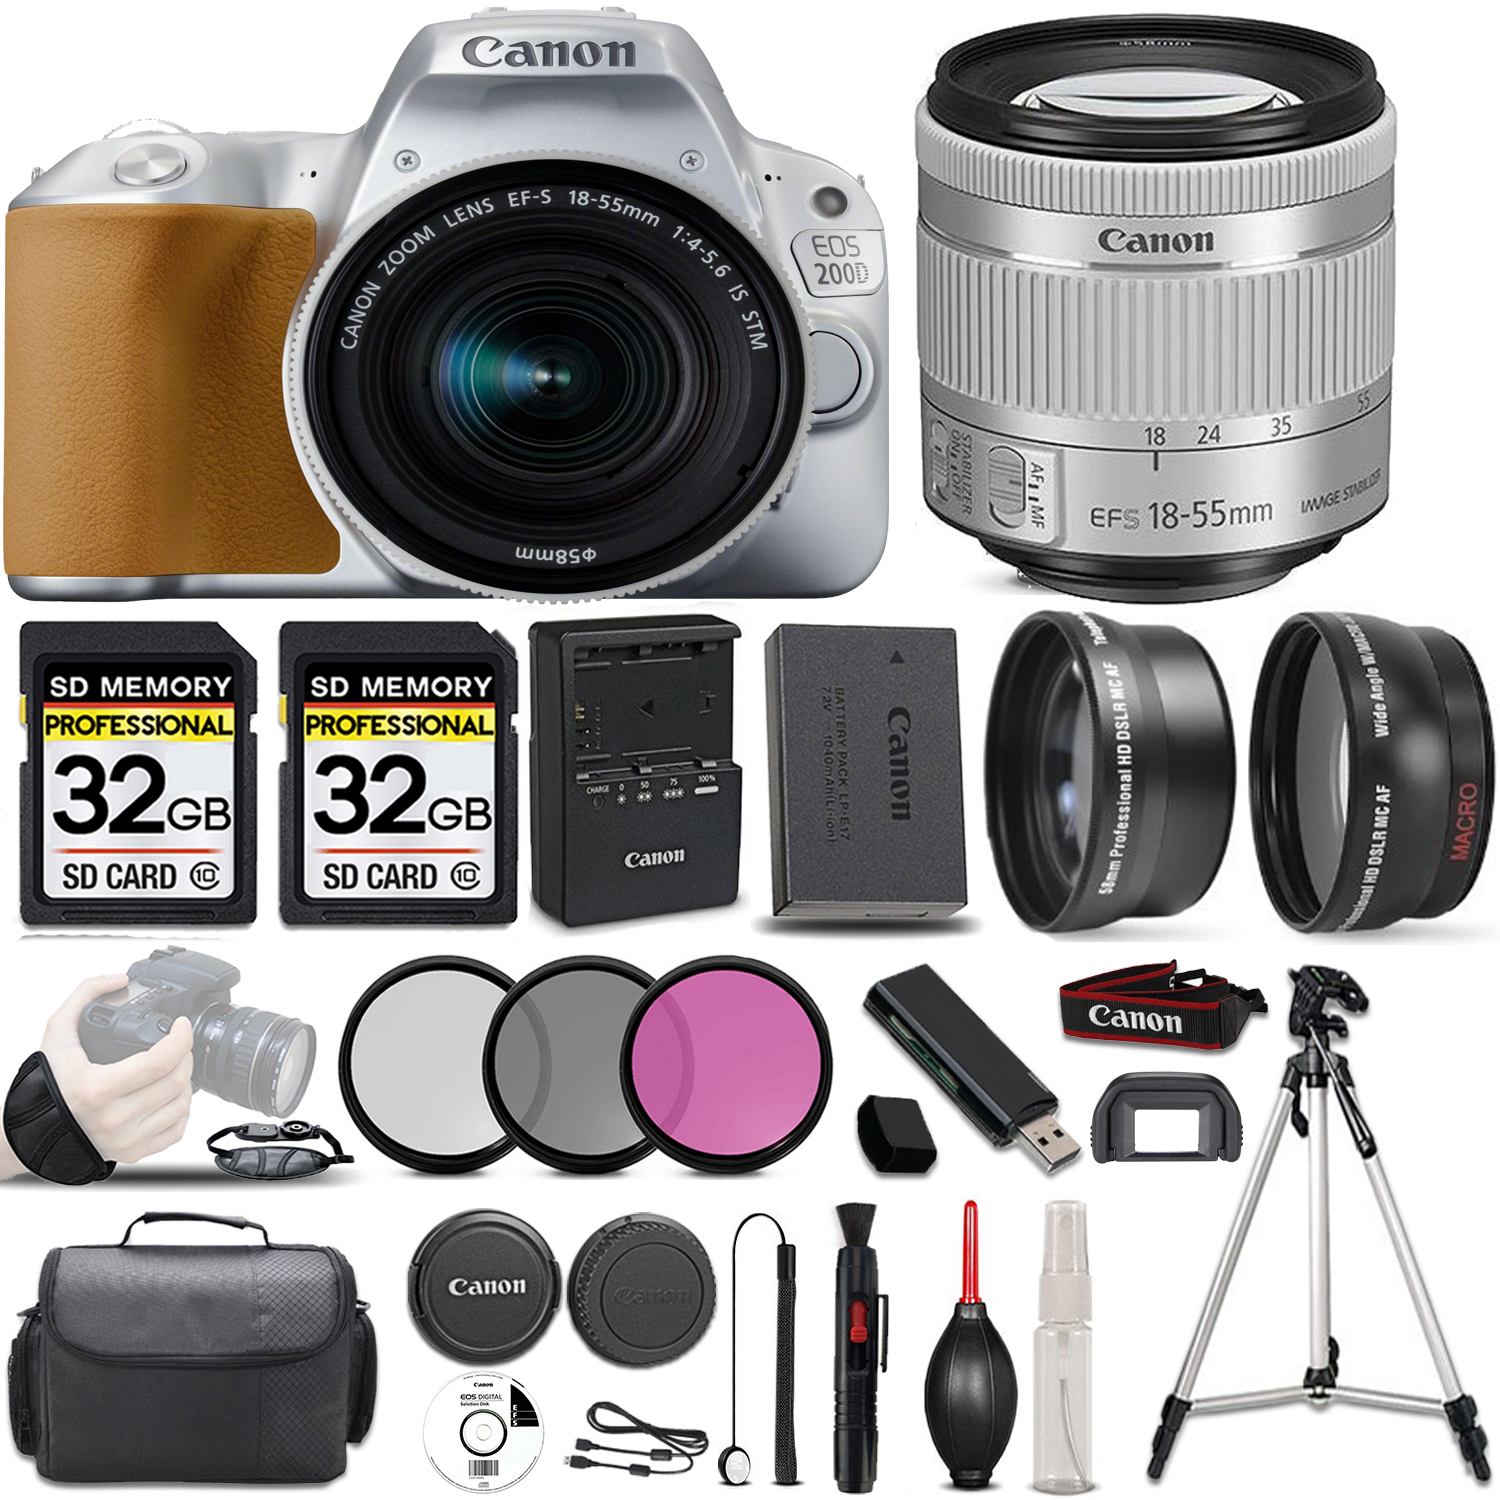 EOS Rebel 200D DSLR Camera(Silver) + 18-55mm STM Lens + 64GB - Accessory Kit *FREE SHIPPING*